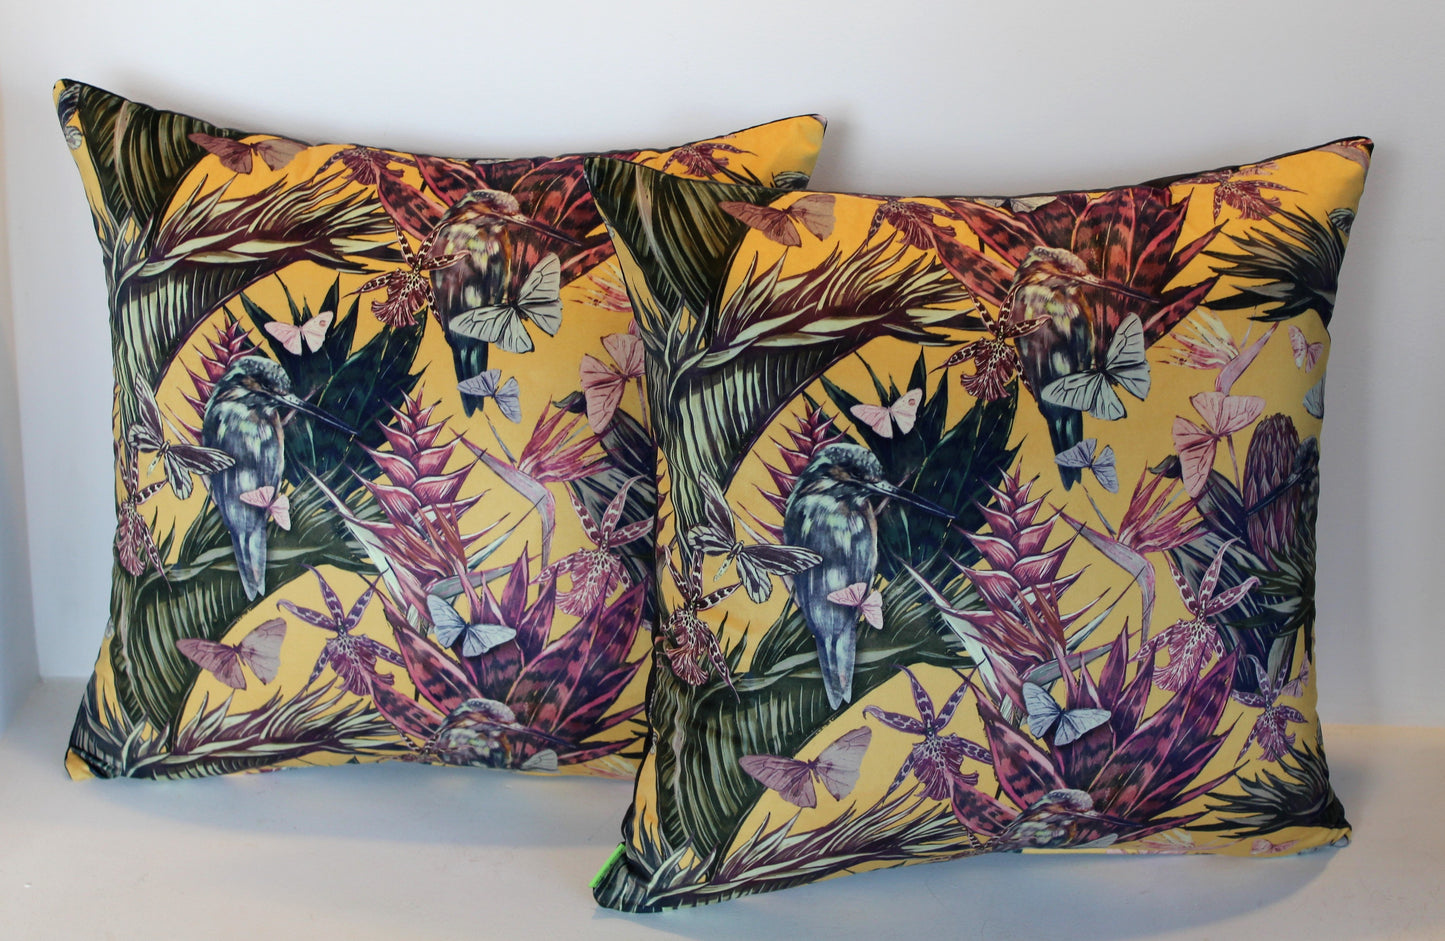 Sunset humming birds - Cushion Cover - 47cm x 47cm